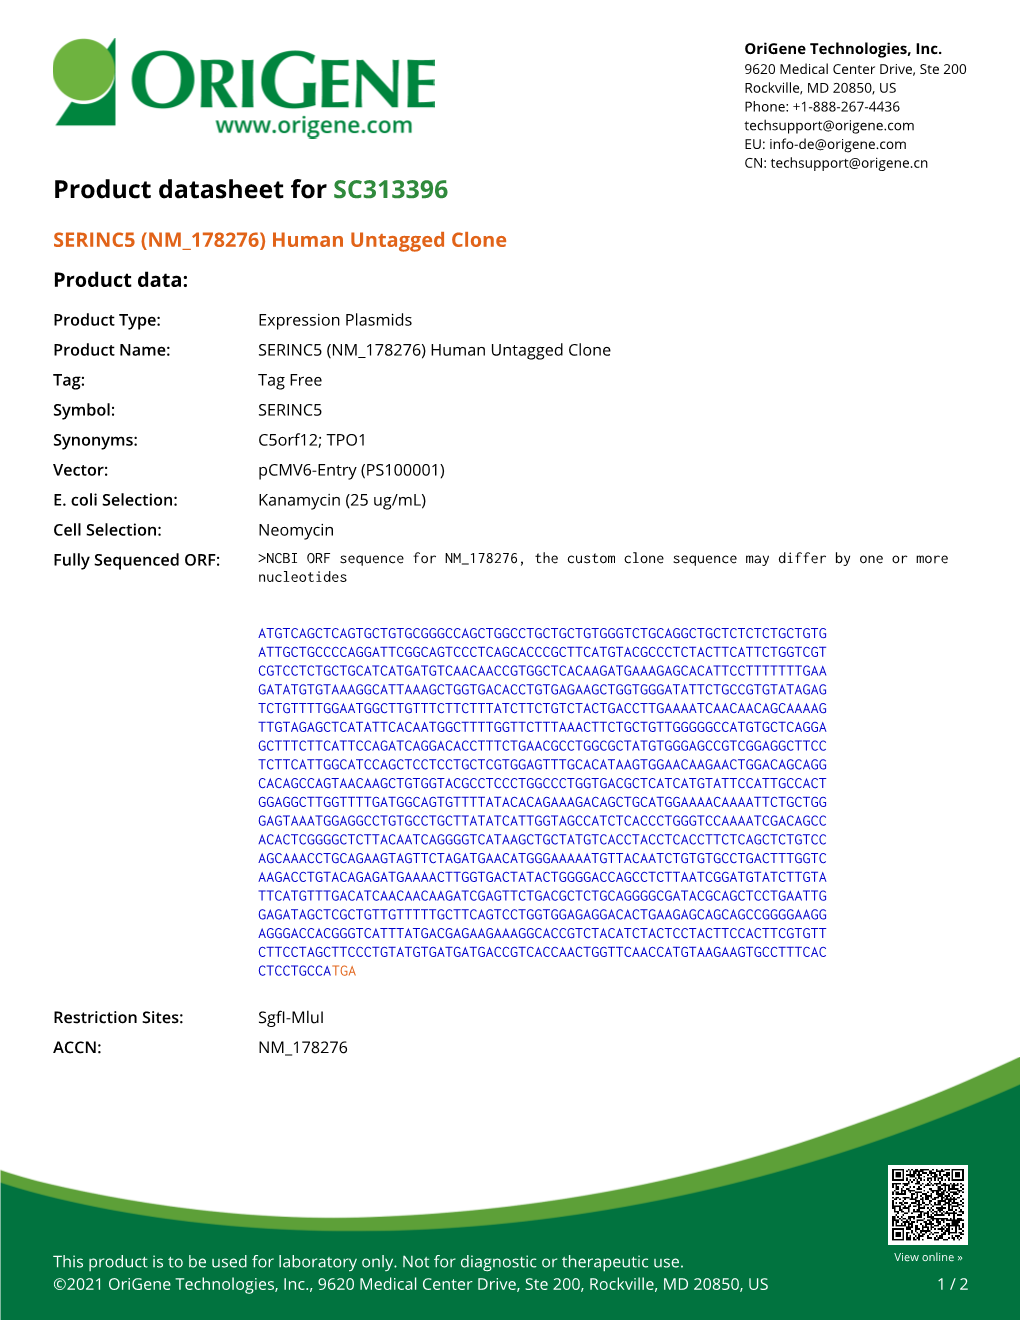 SERINC5 (NM 178276) Human Untagged Clone Product Data